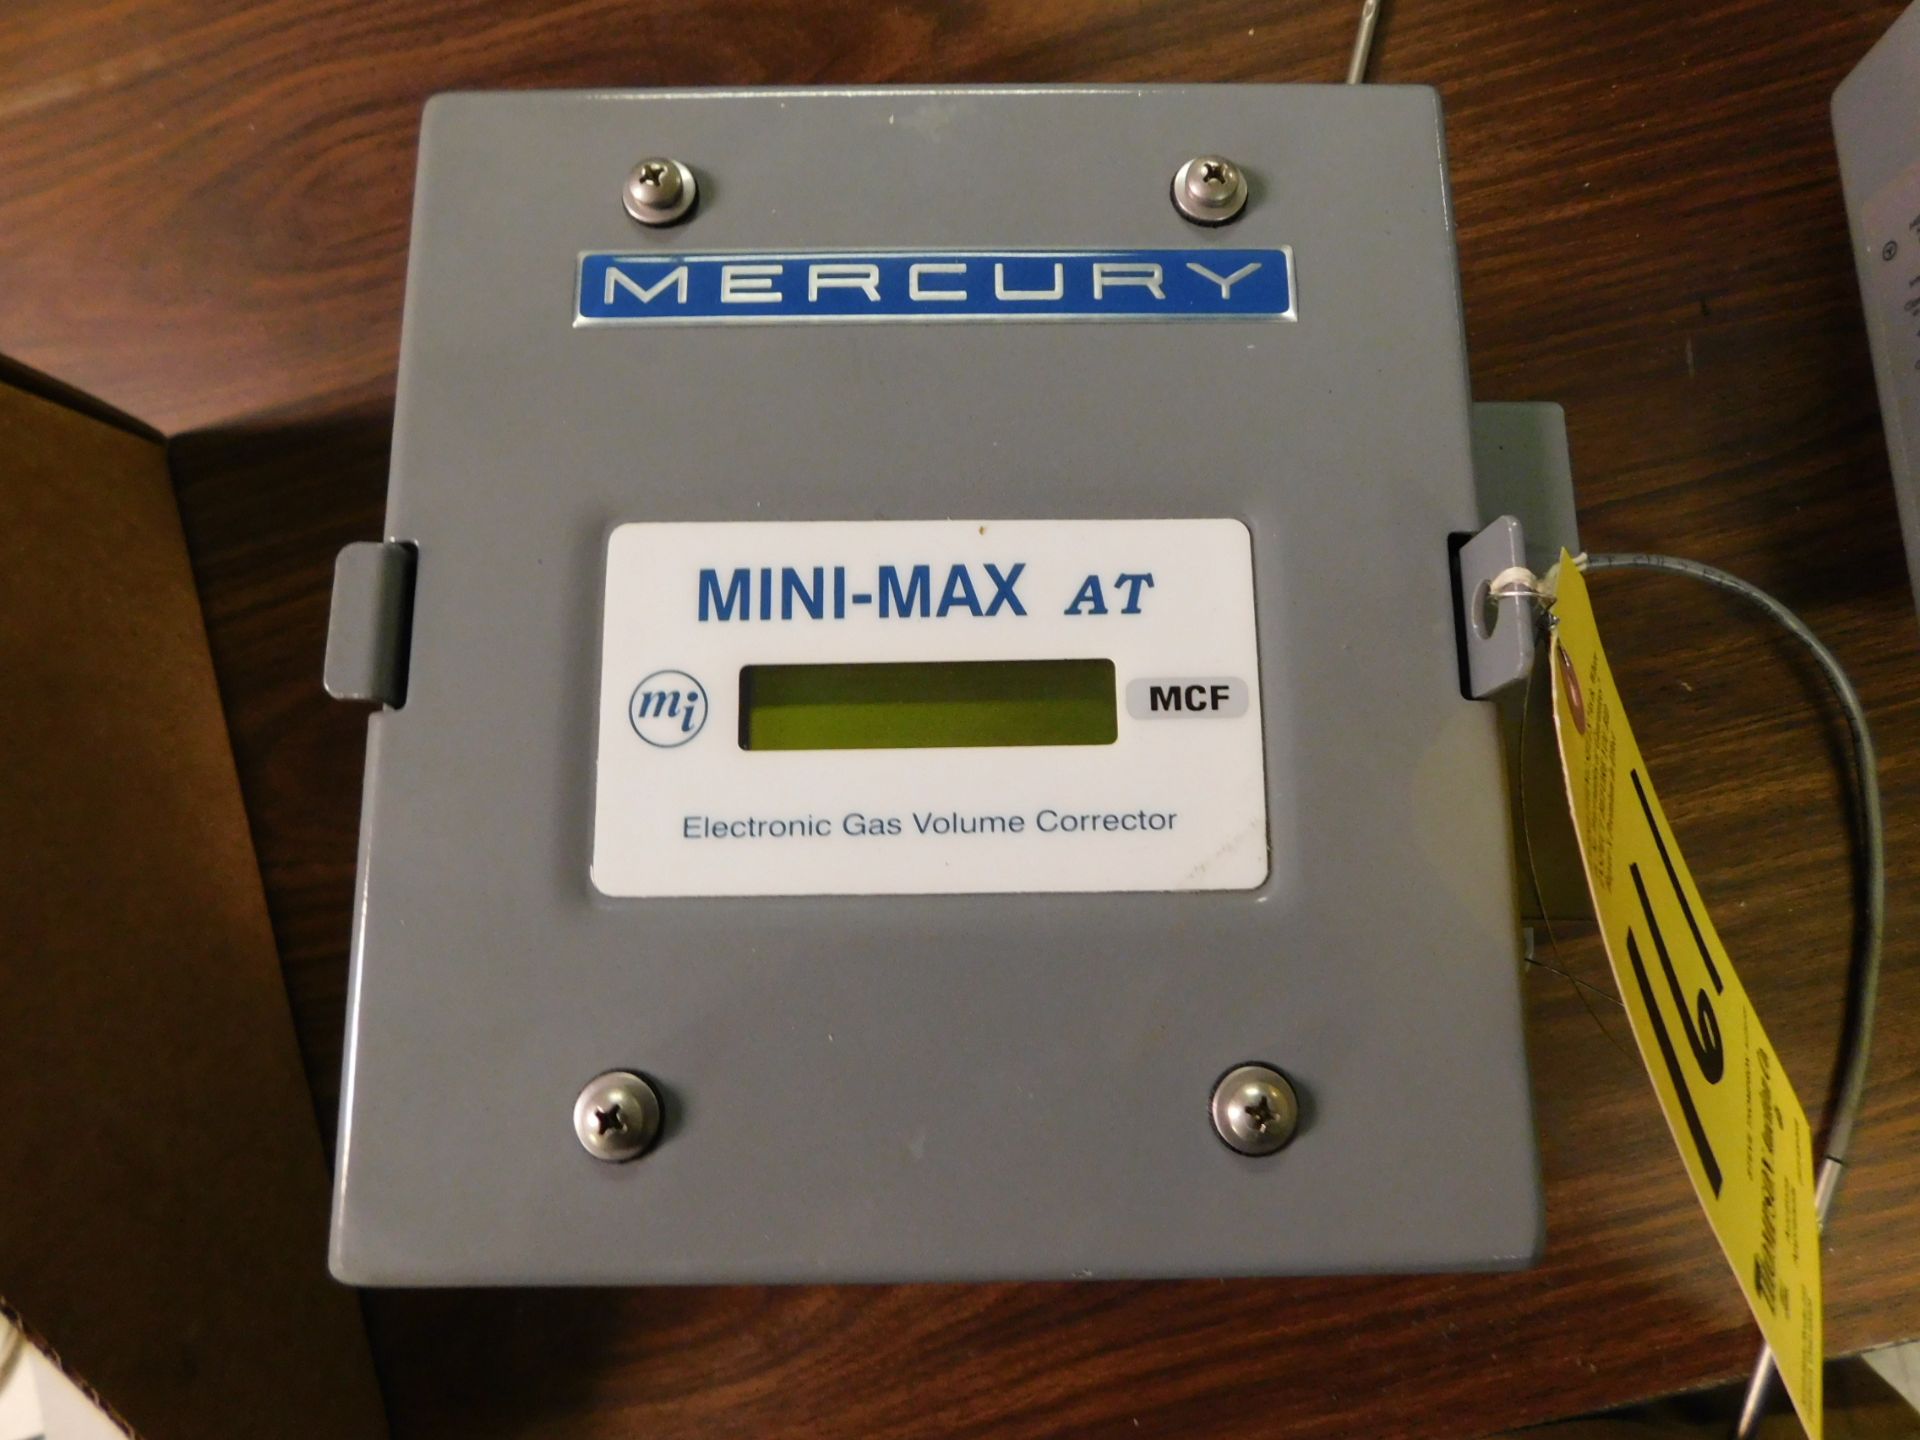 Mercury Mini-Max AT Electronic Gas Volume Corrector